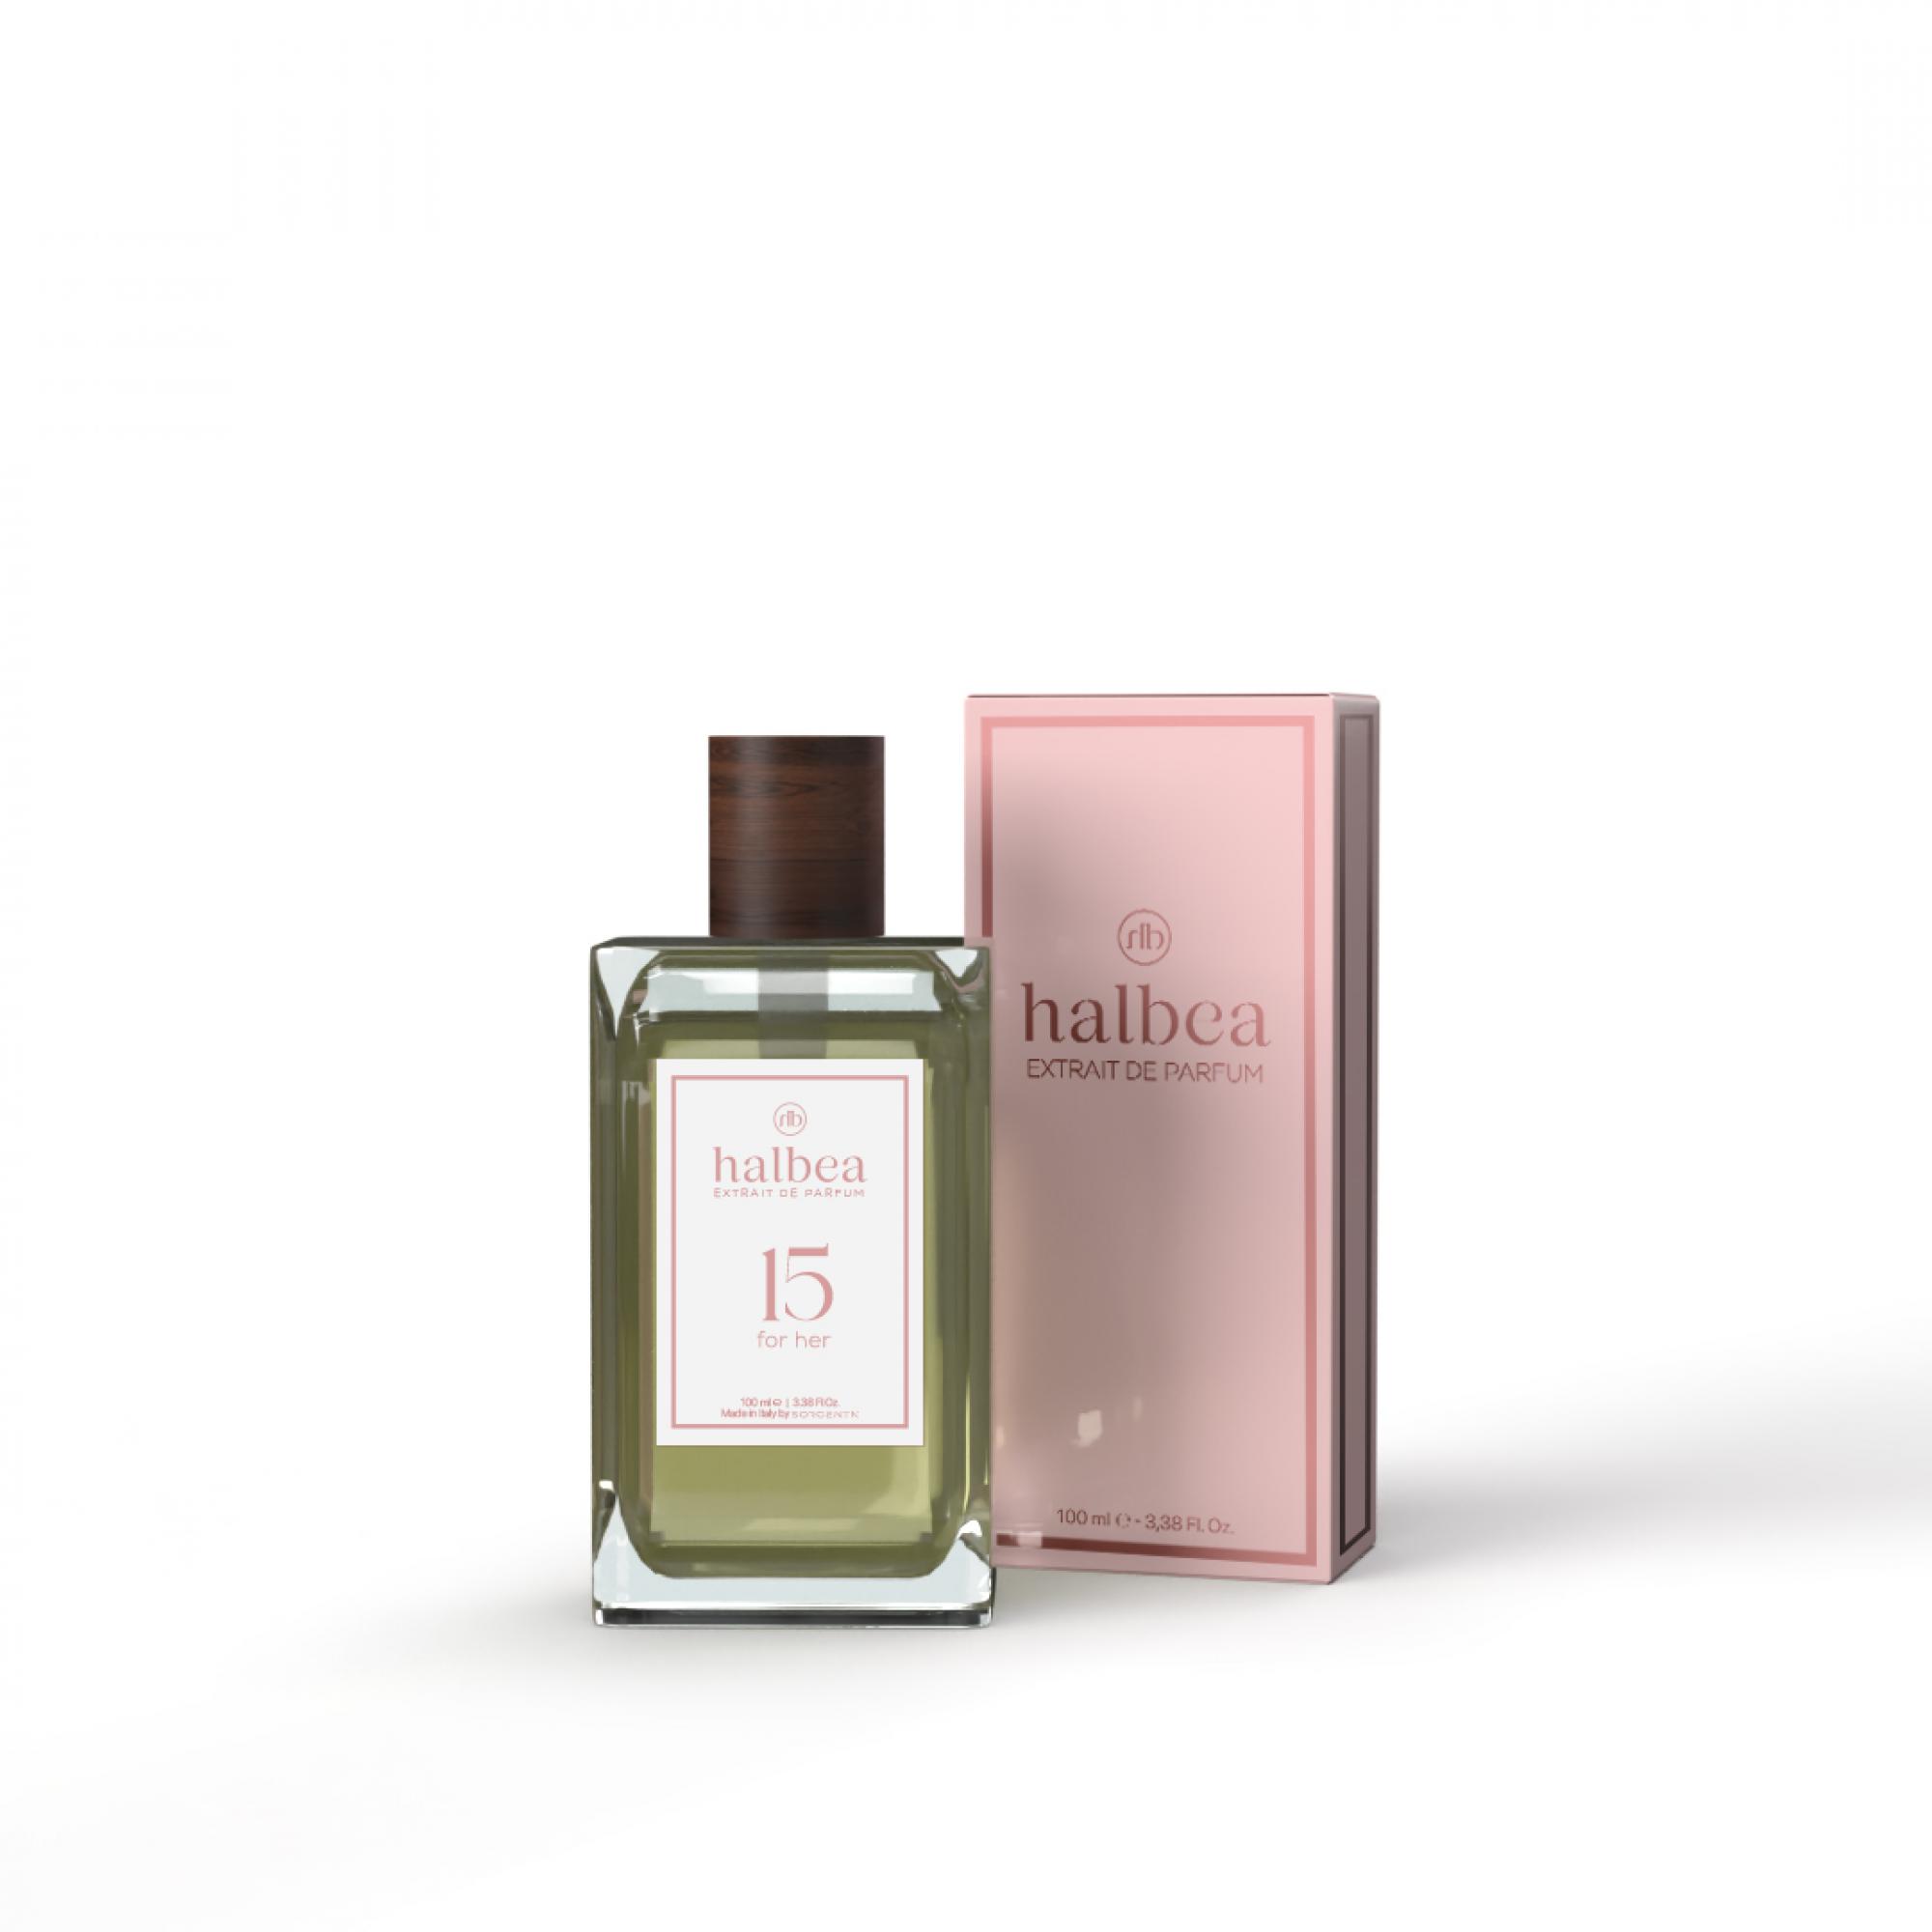 Halbea Parfum Nr. 15 insp. by Dolce&Gabbana Devotion 100ml Sorgenta Duftzwillinge